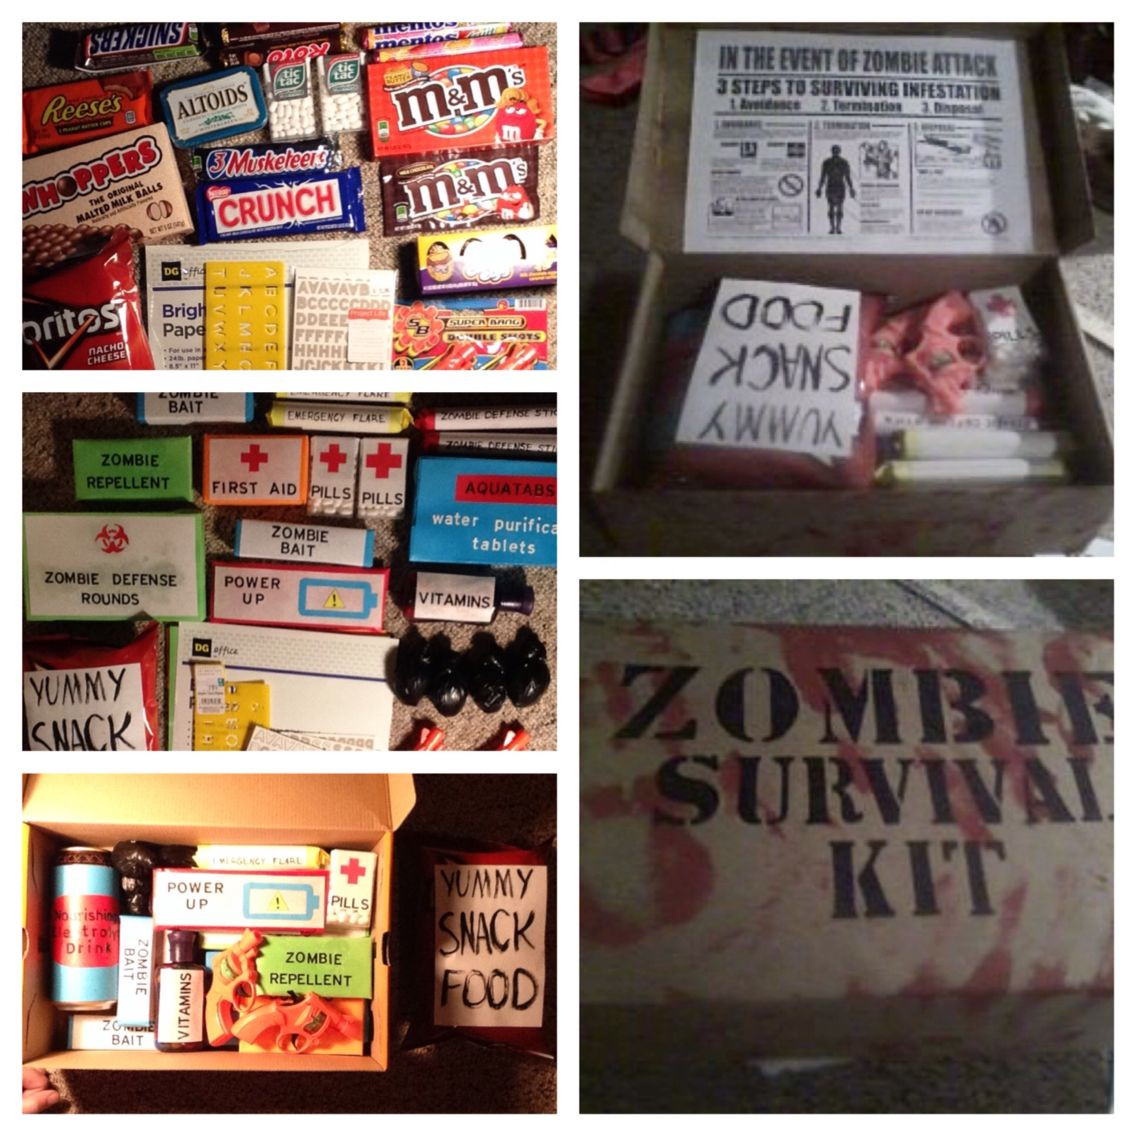 Zombie Survival Kit DIY
 Zombie Survival Kit for the Boyfriend s birthday Loved